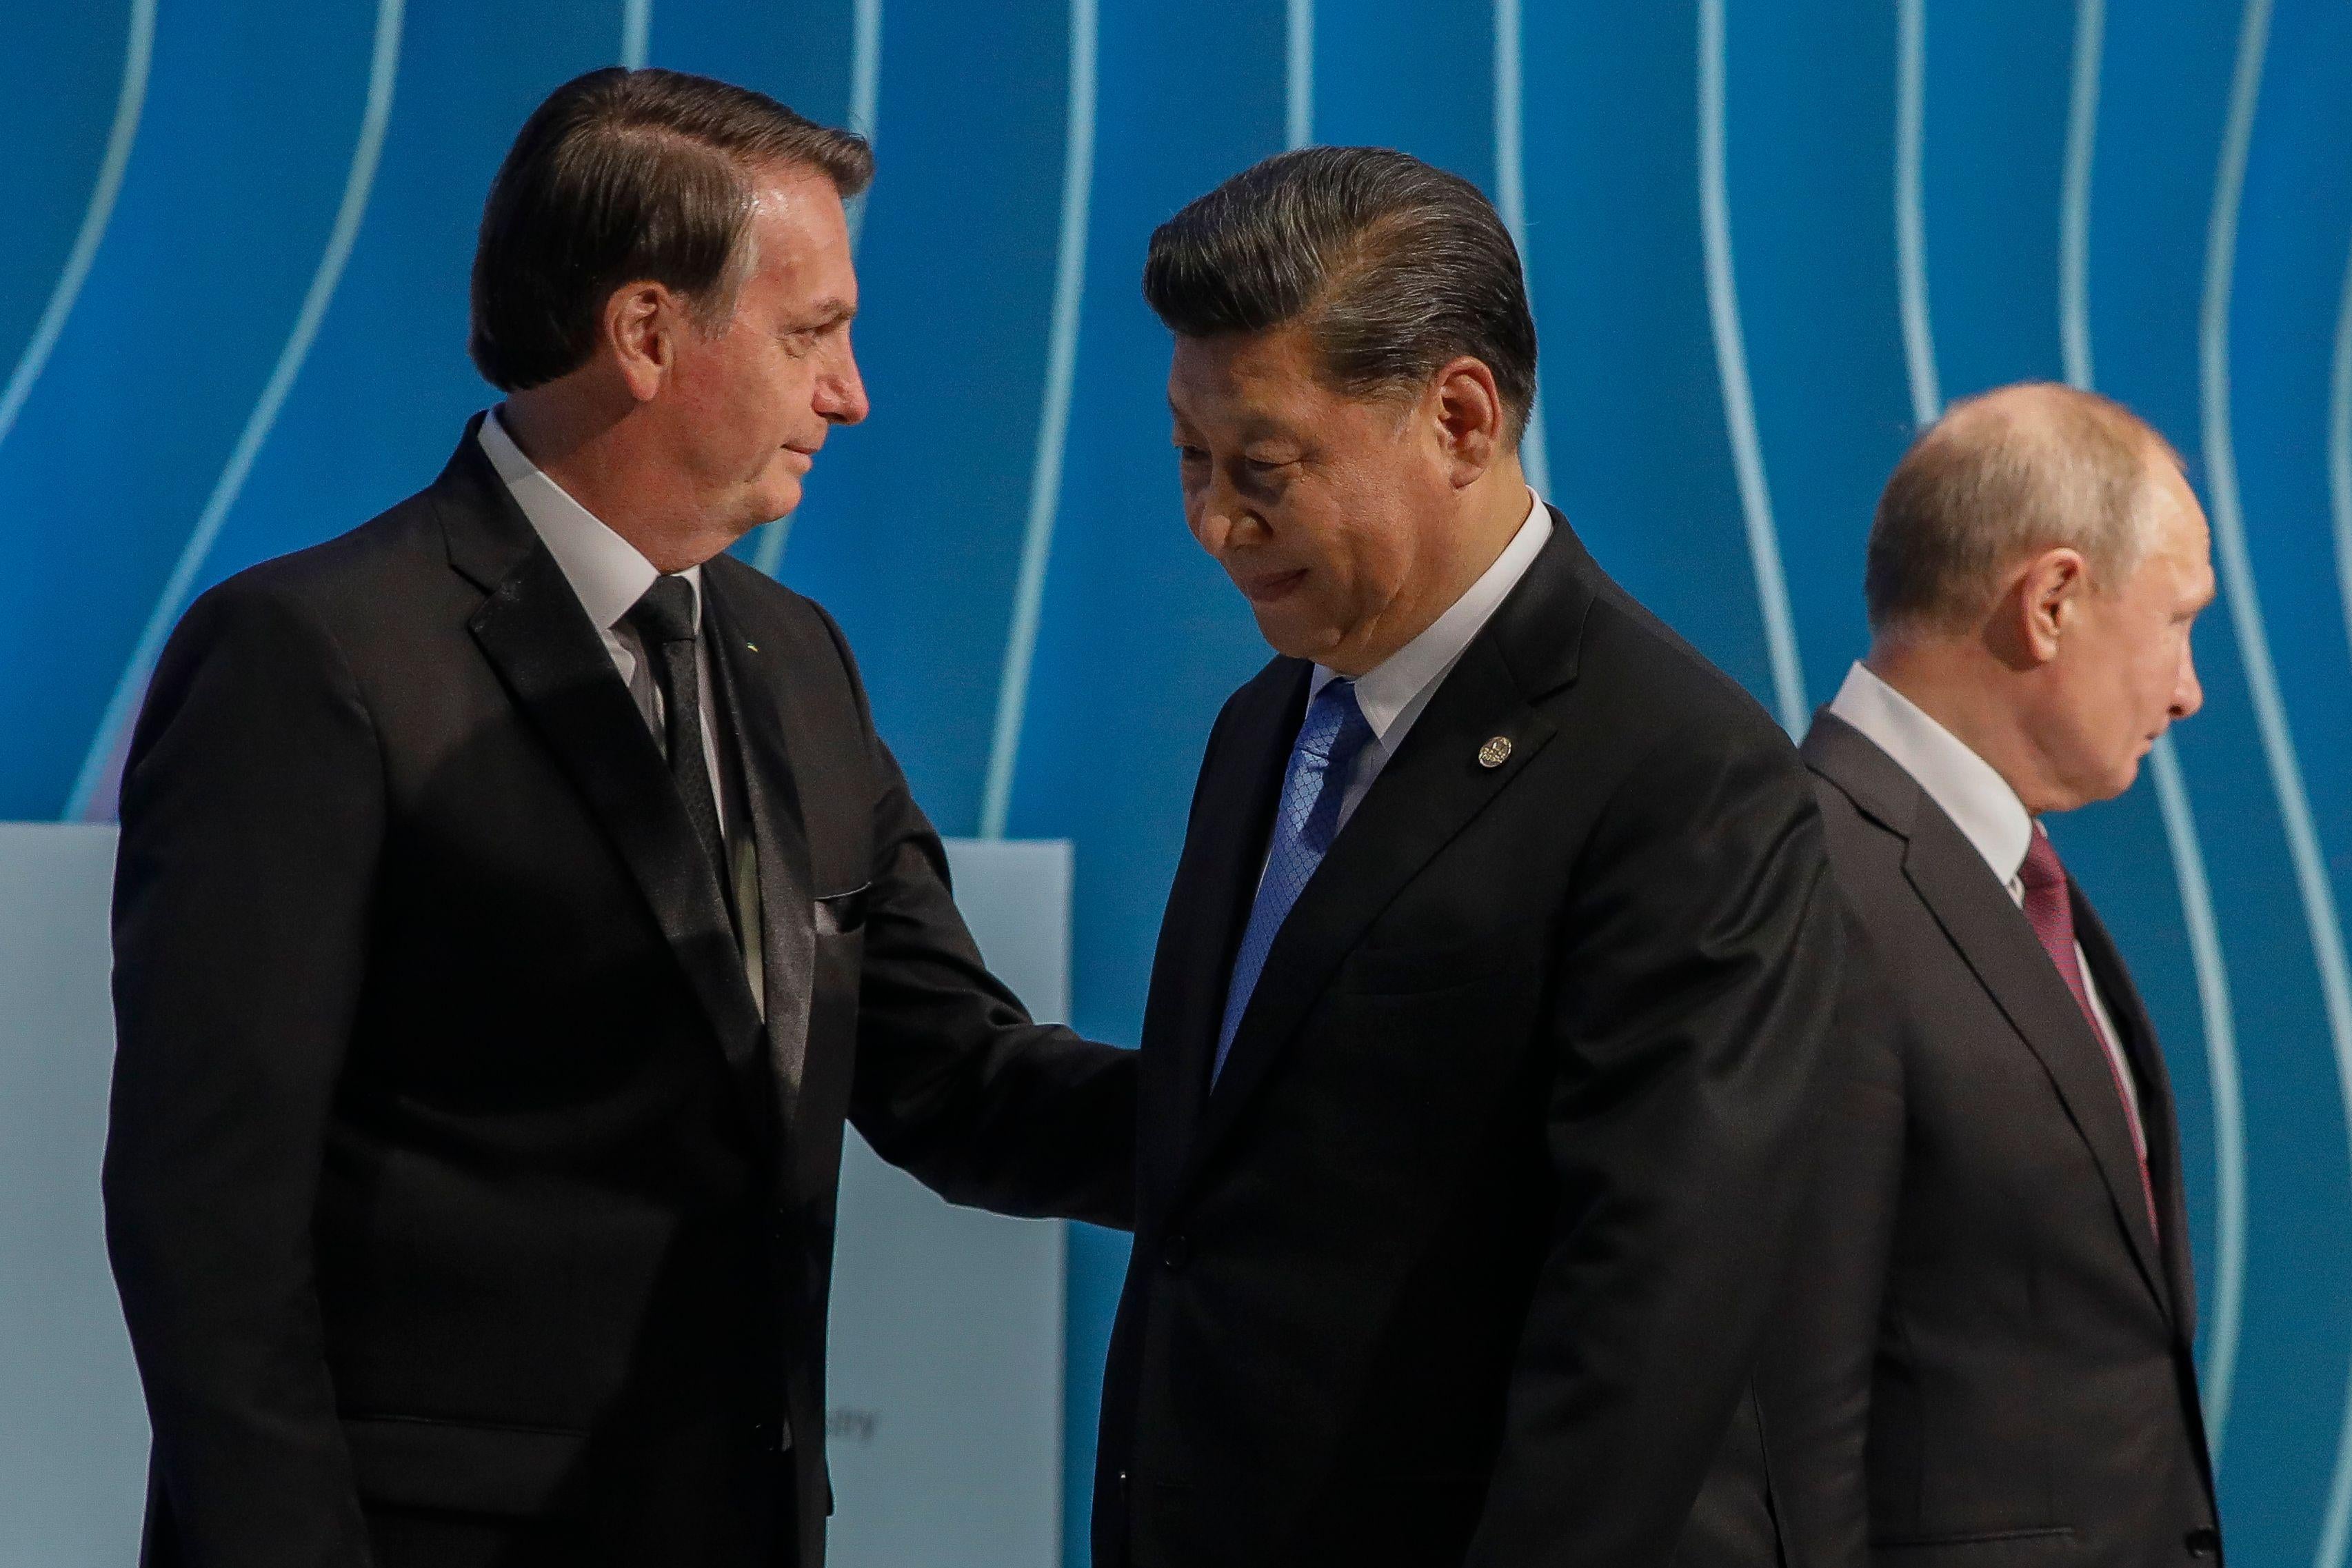 Bolsonaro speaks with Xi. Putin is seen behind them. 